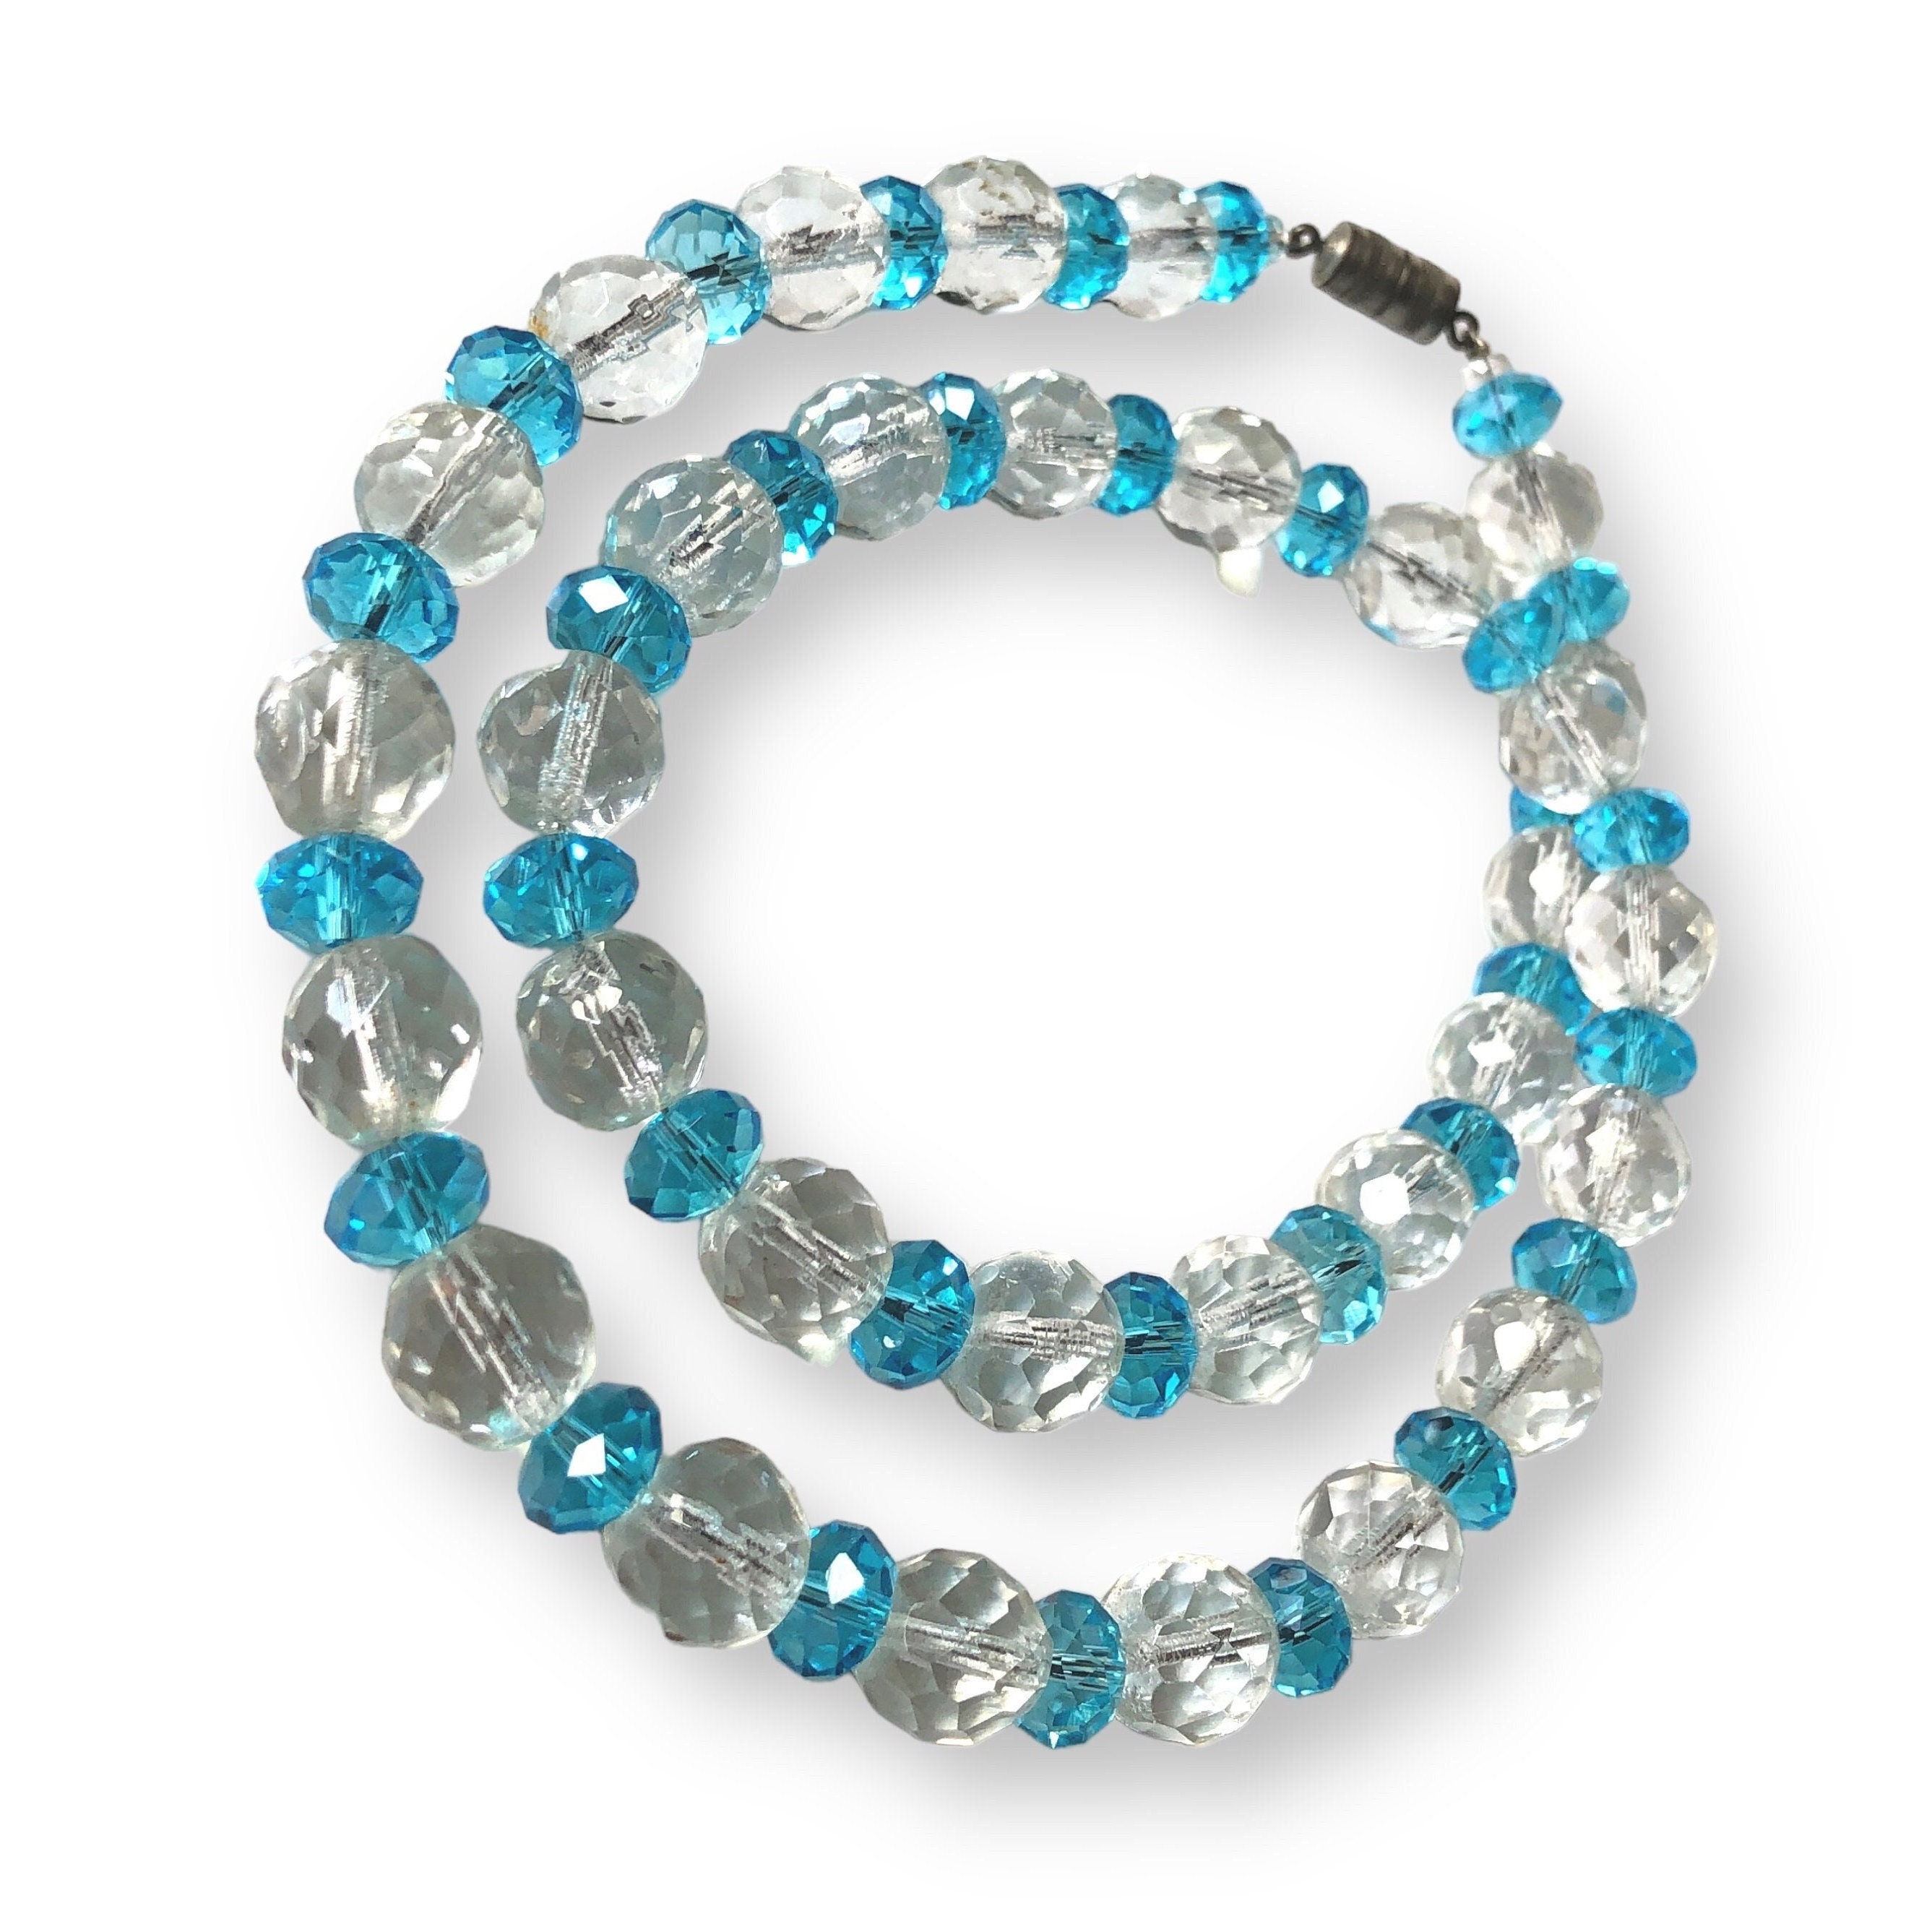 1mm Crystal rondelle beads strand 170 pcs, PBC1C19